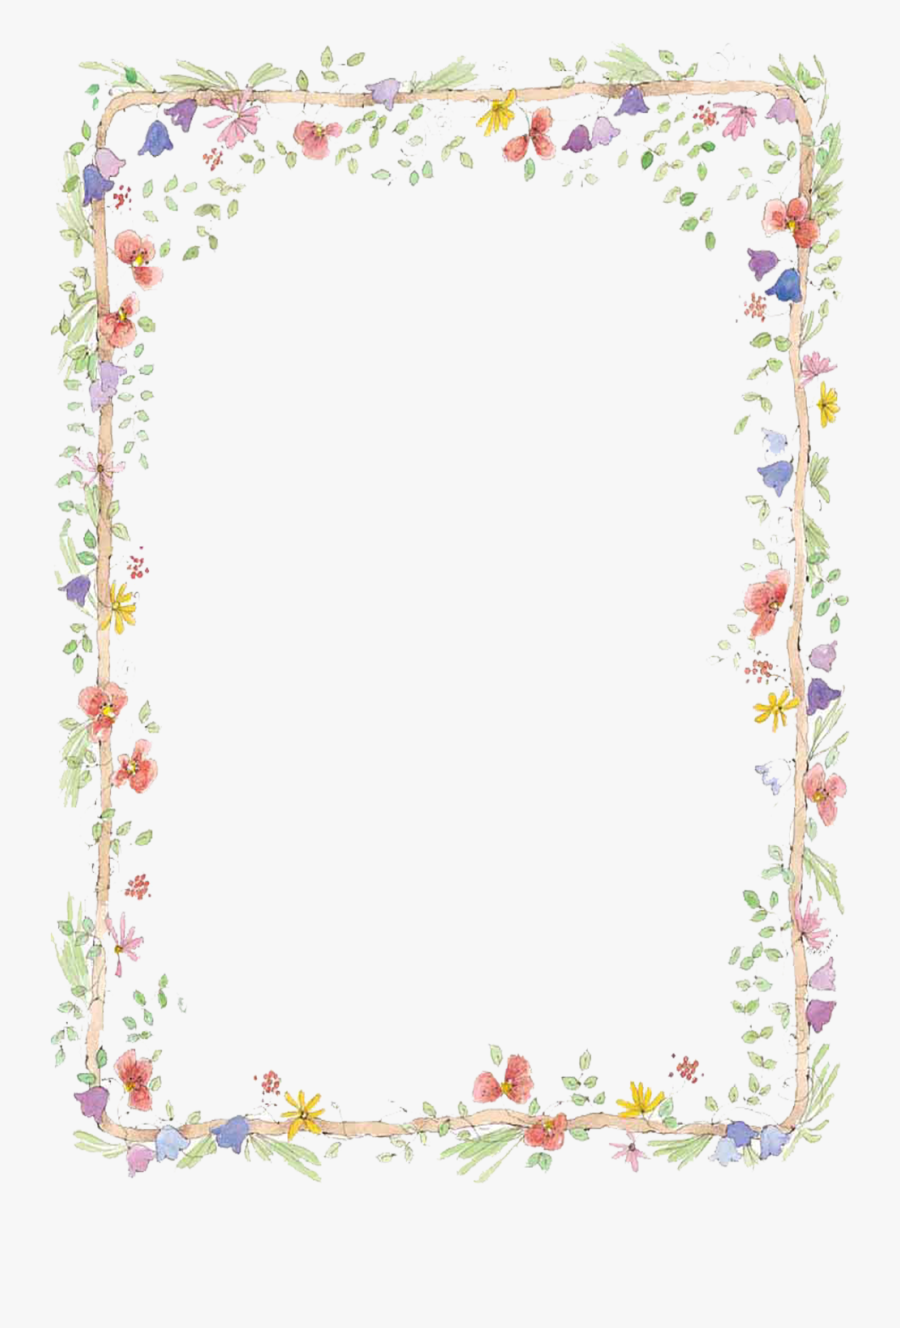 Free Printable Floral Borders - Image to u